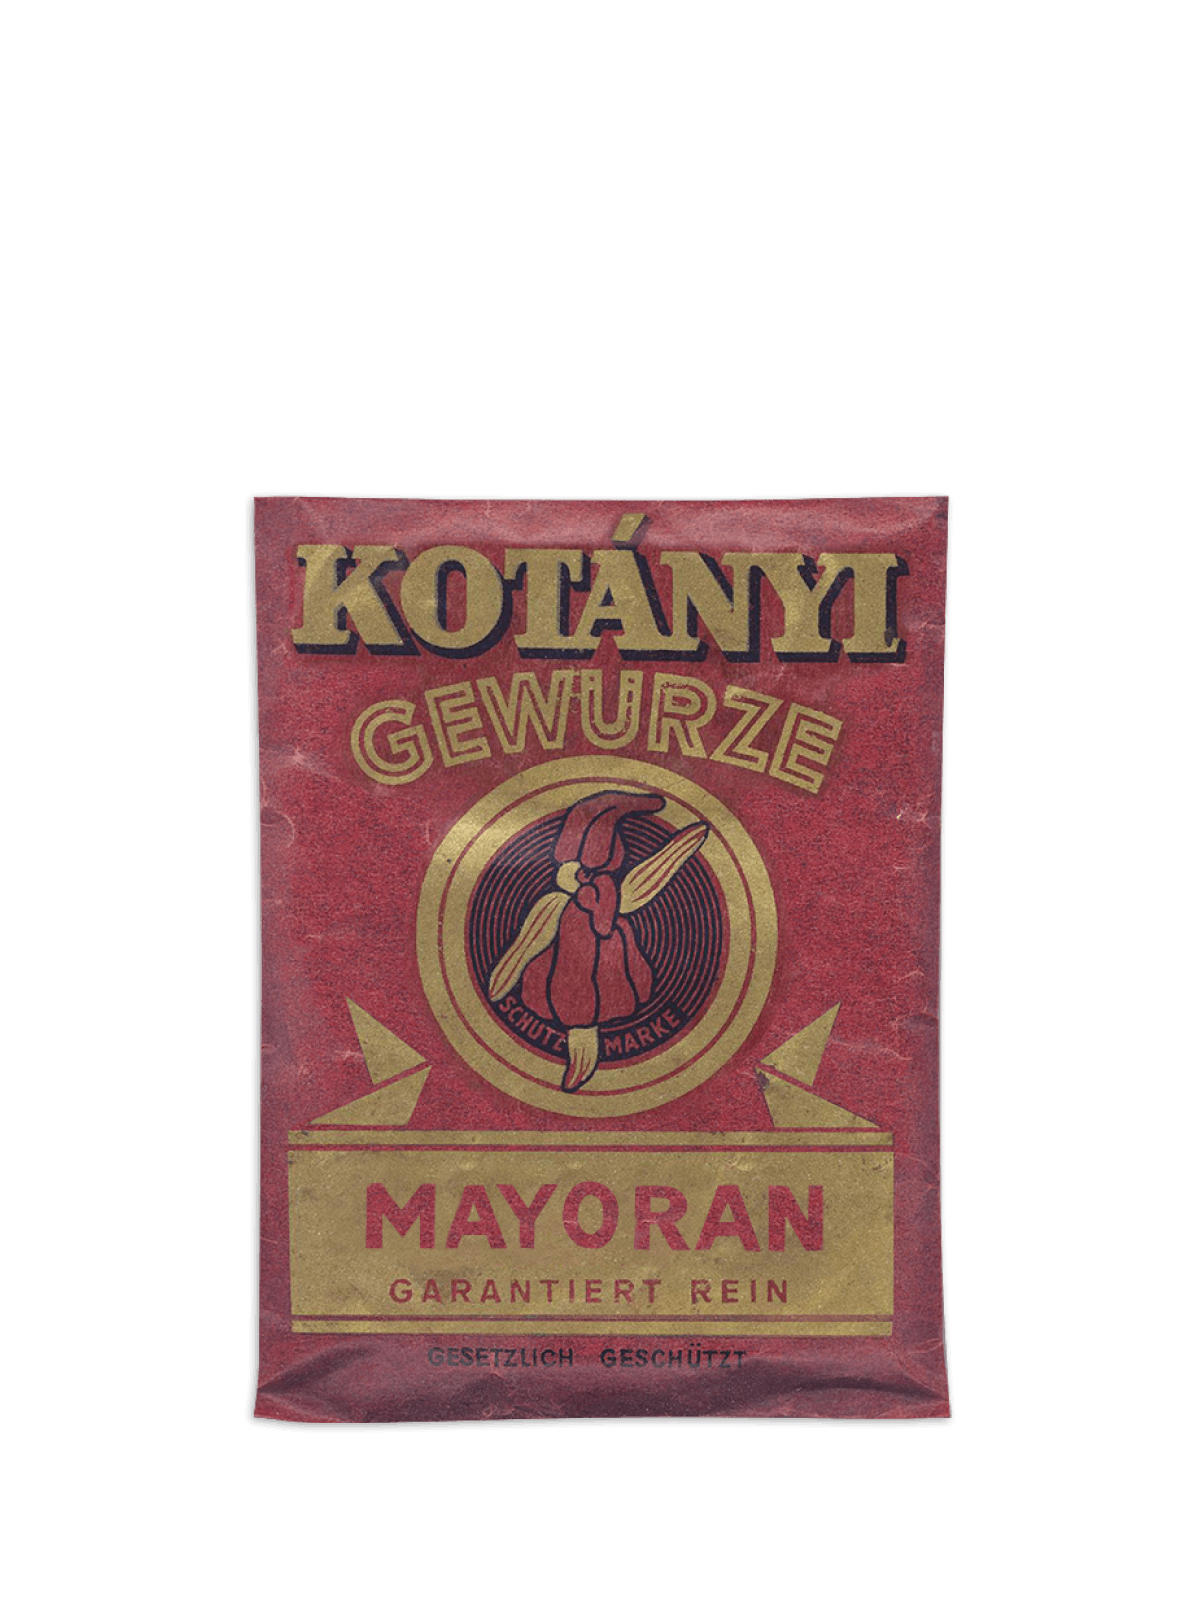 A Kotányi marjoram sachet from the 1950s.